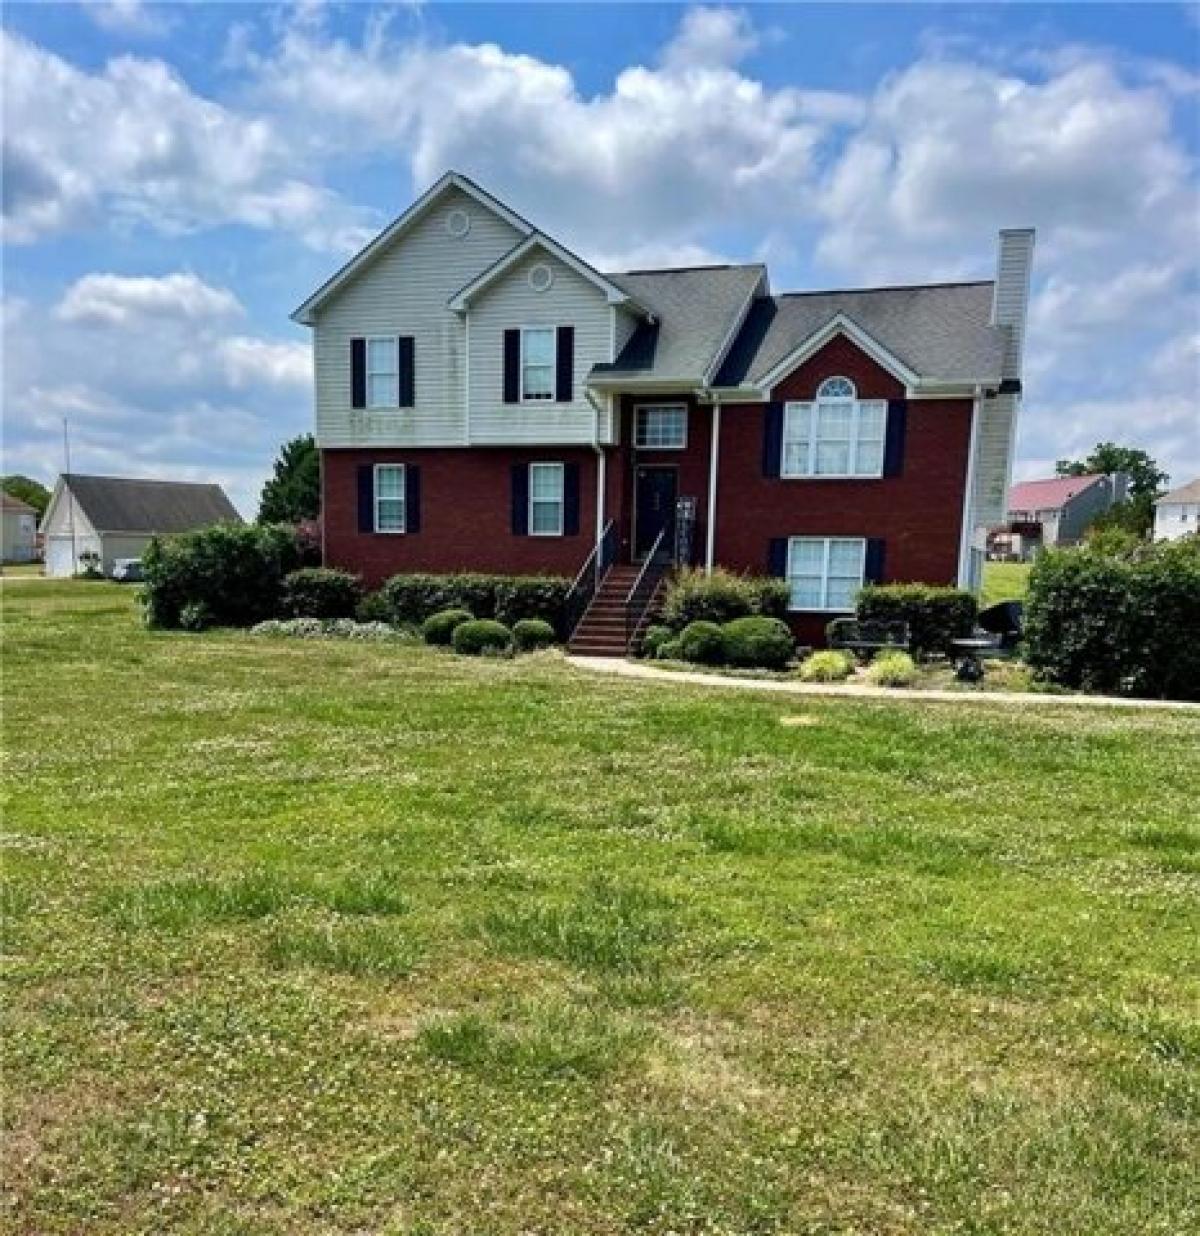 Picture of Home For Sale in Calhoun, Georgia, United States